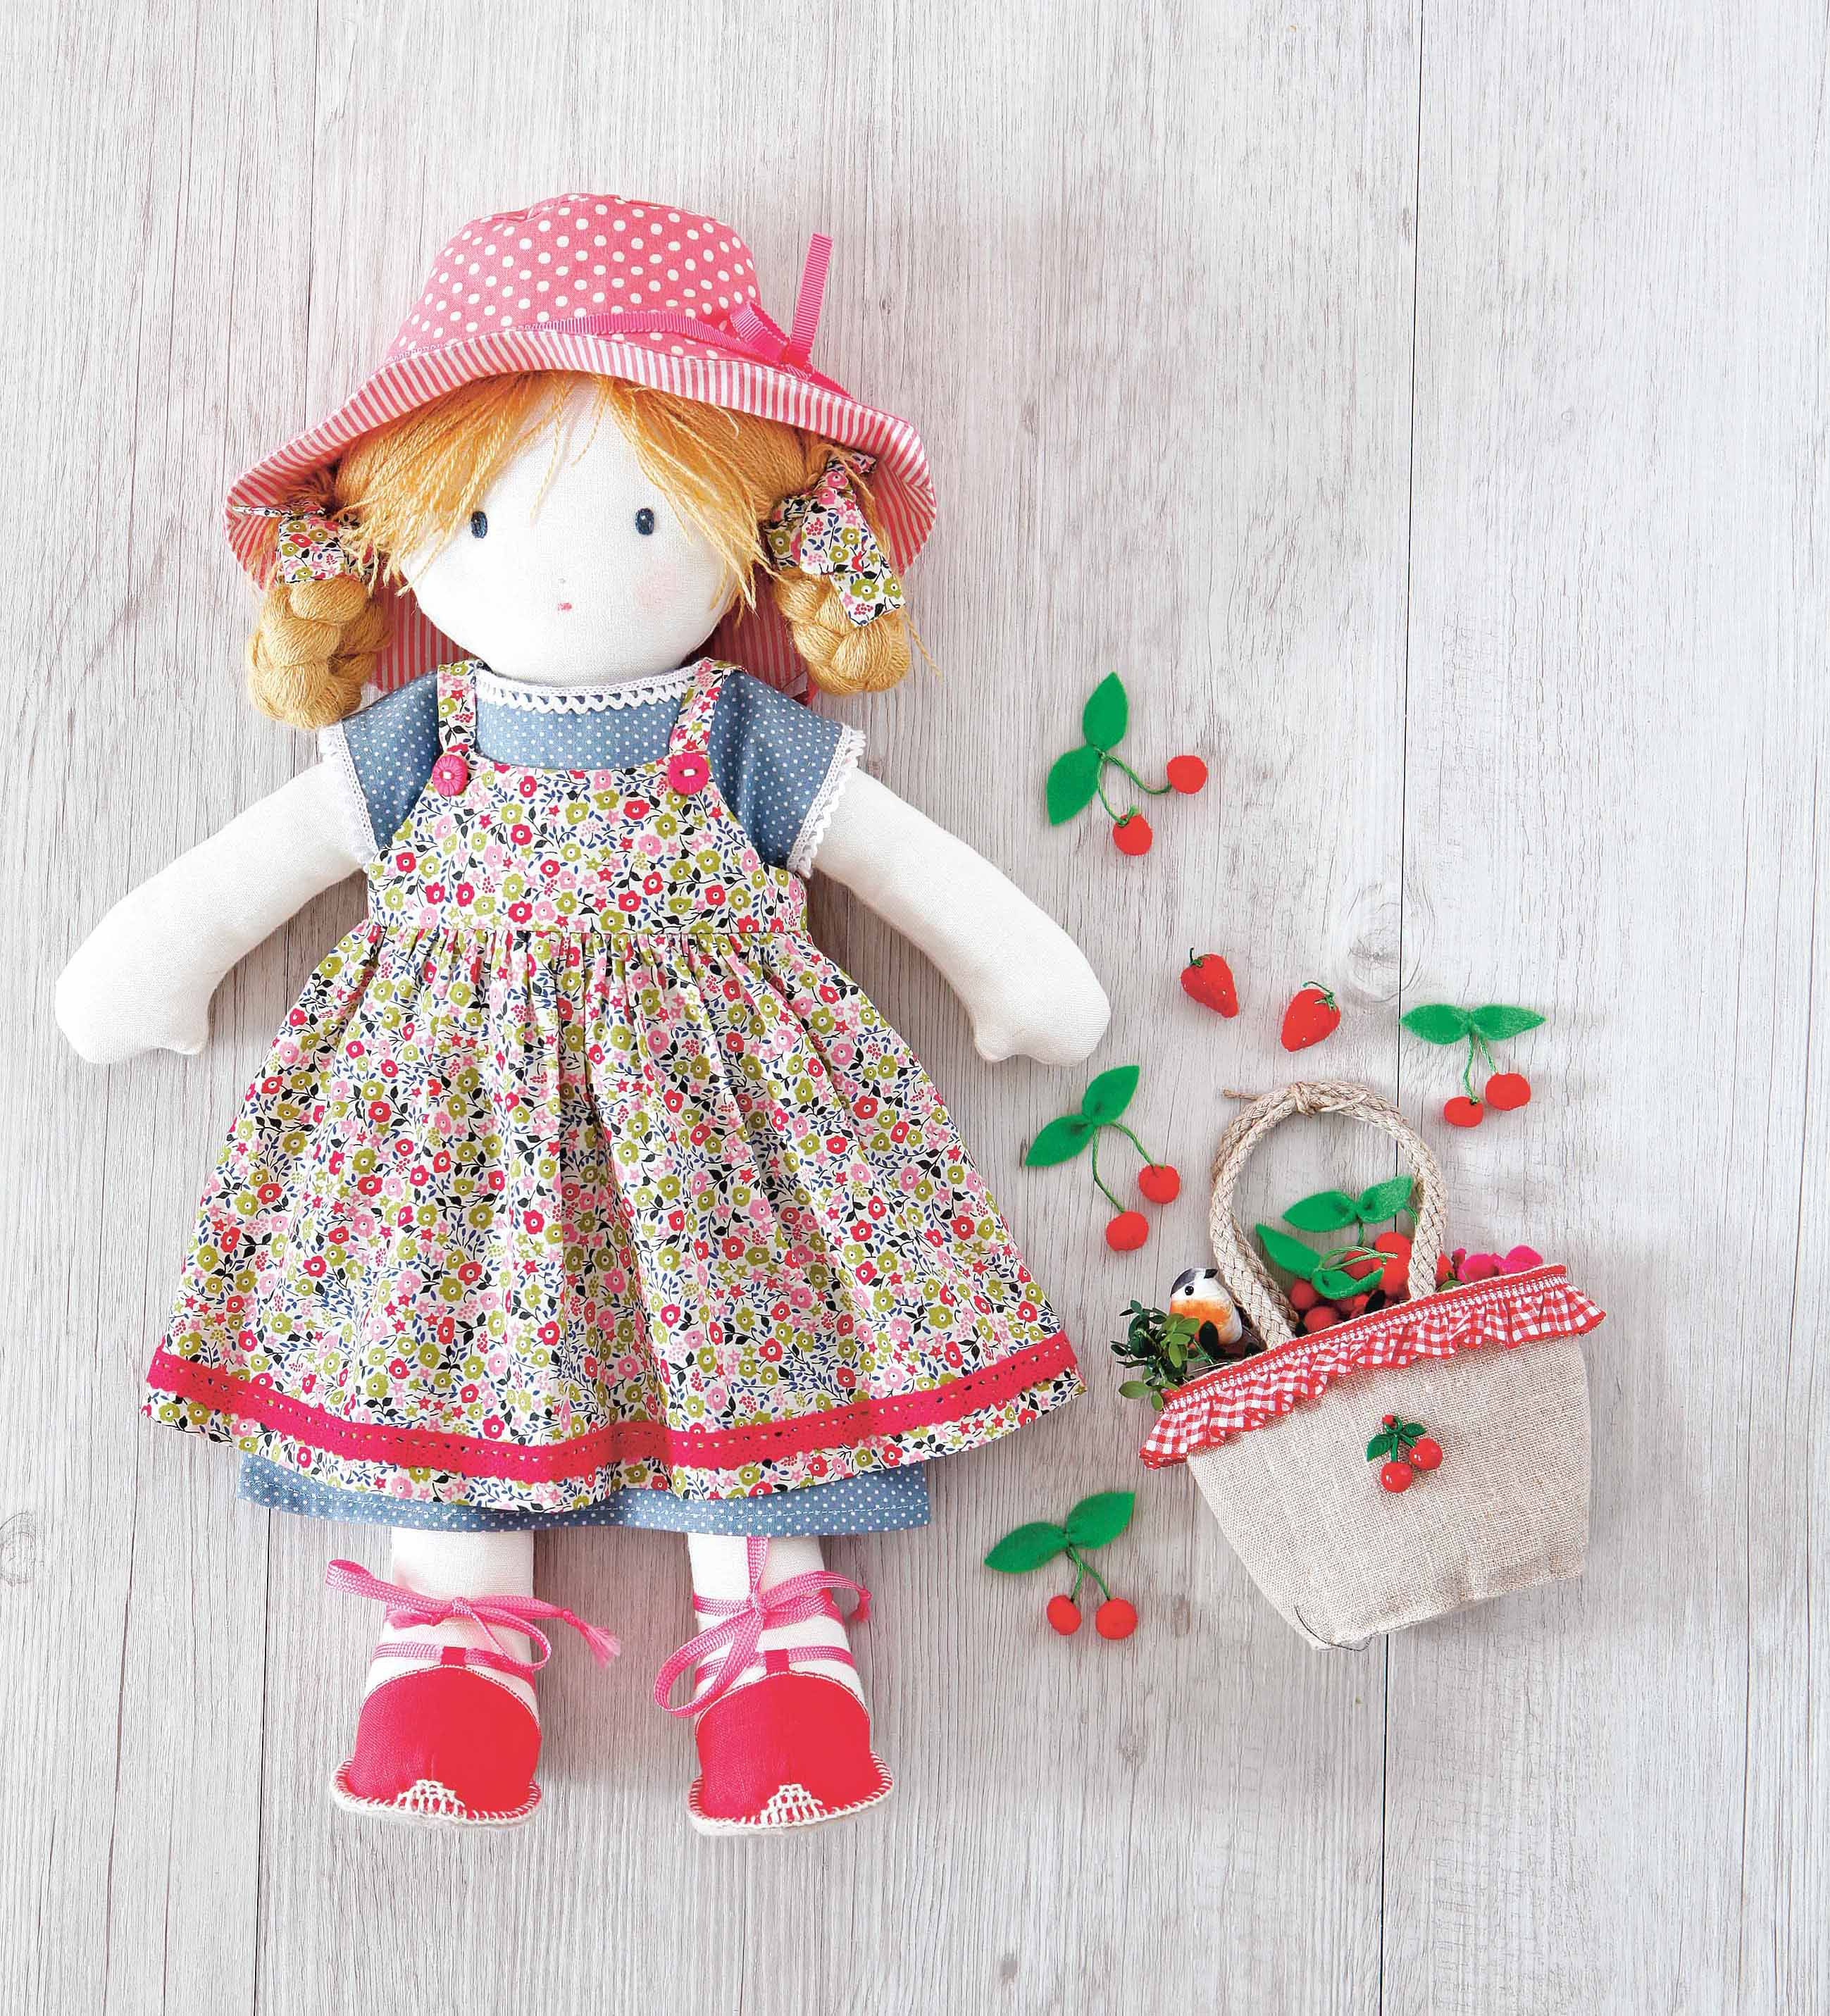 Pattern: Printable Rag Doll Sewing Pattern | Sewing | Pinterest - Free Printable Cloth Doll Sewing Patterns